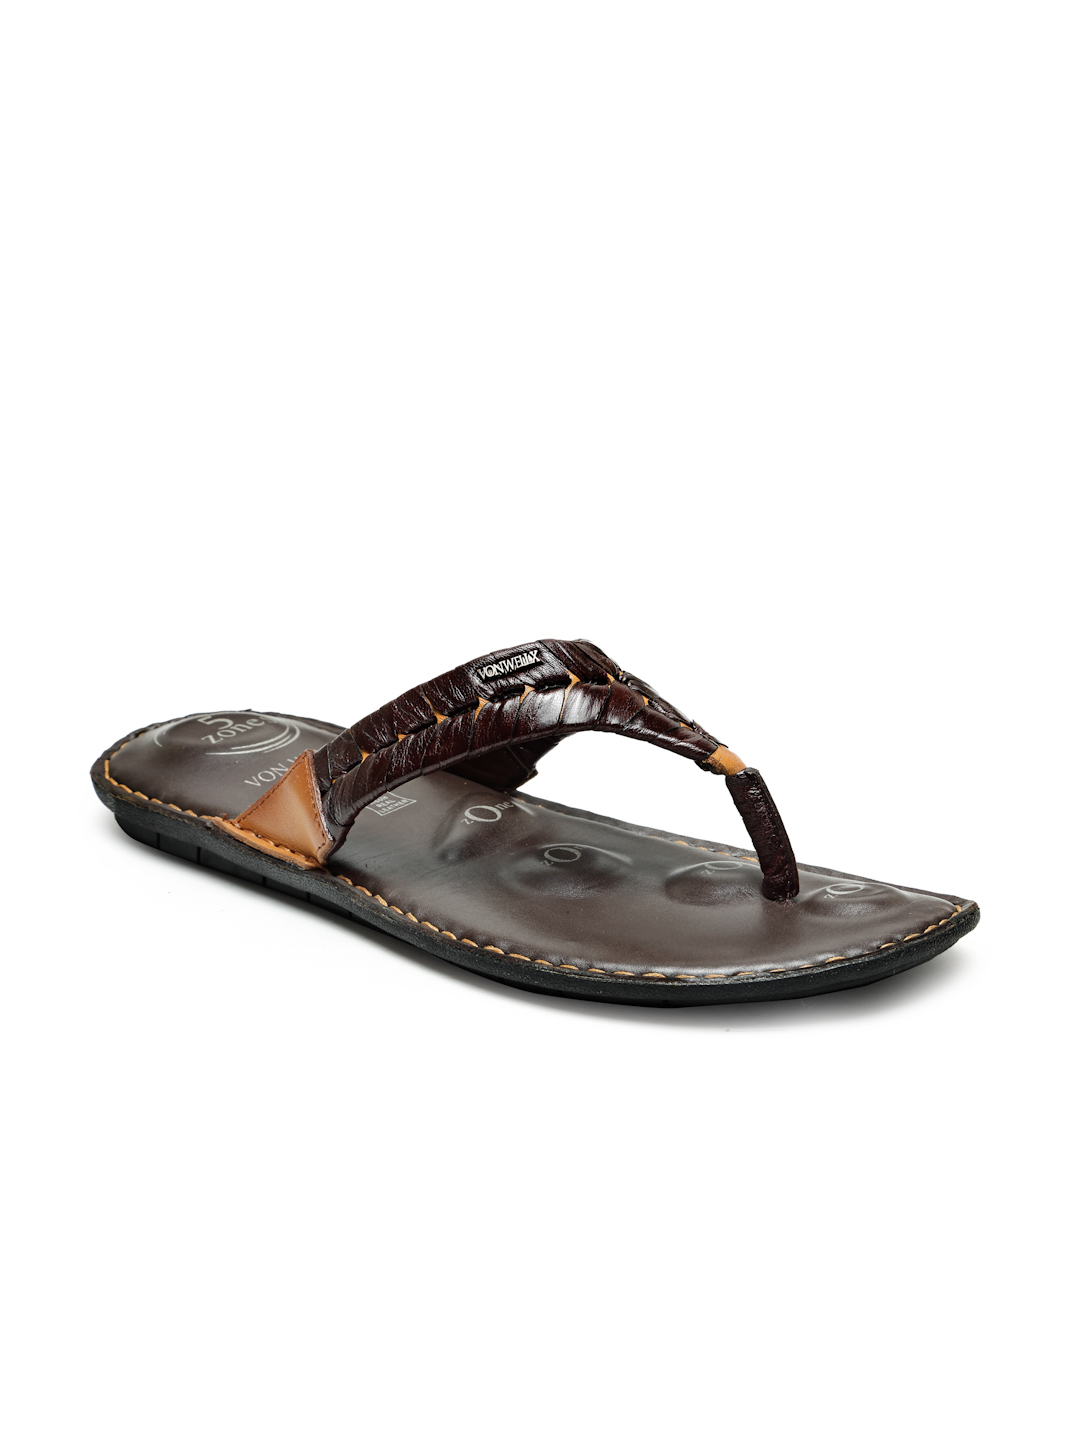 Buy Von Wellx Germany Comfort Men's Tan Slippers Alonso Online in Patna